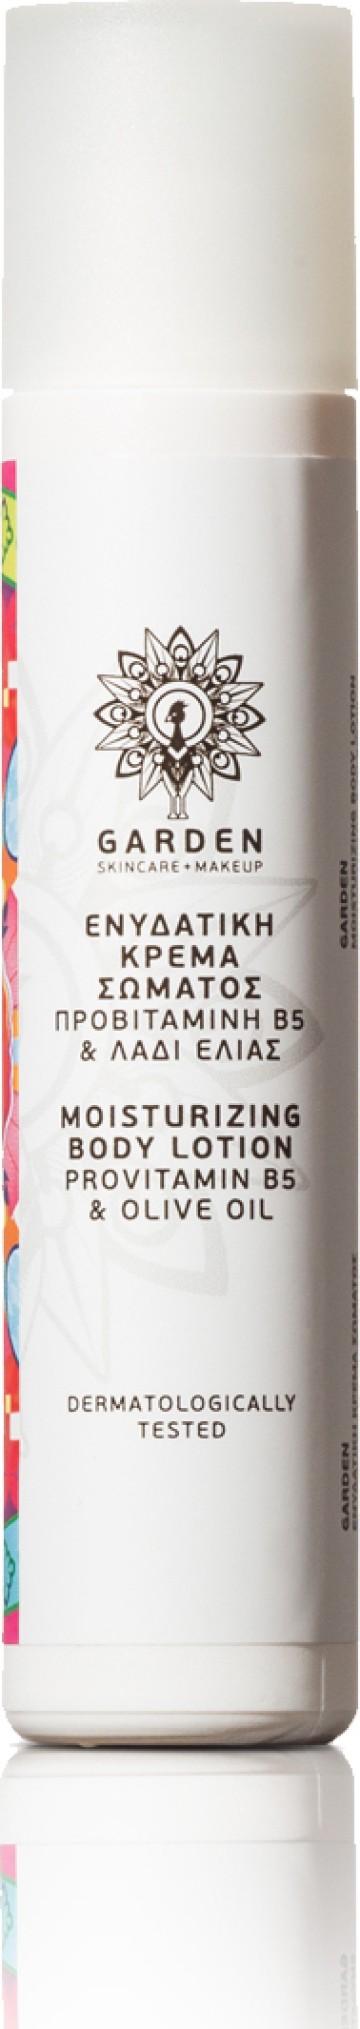 Garden Ενυδατική Κρέμα Σώματος με Προβιοταμίνη Β5 & Λάδι Ελιάς 30ml